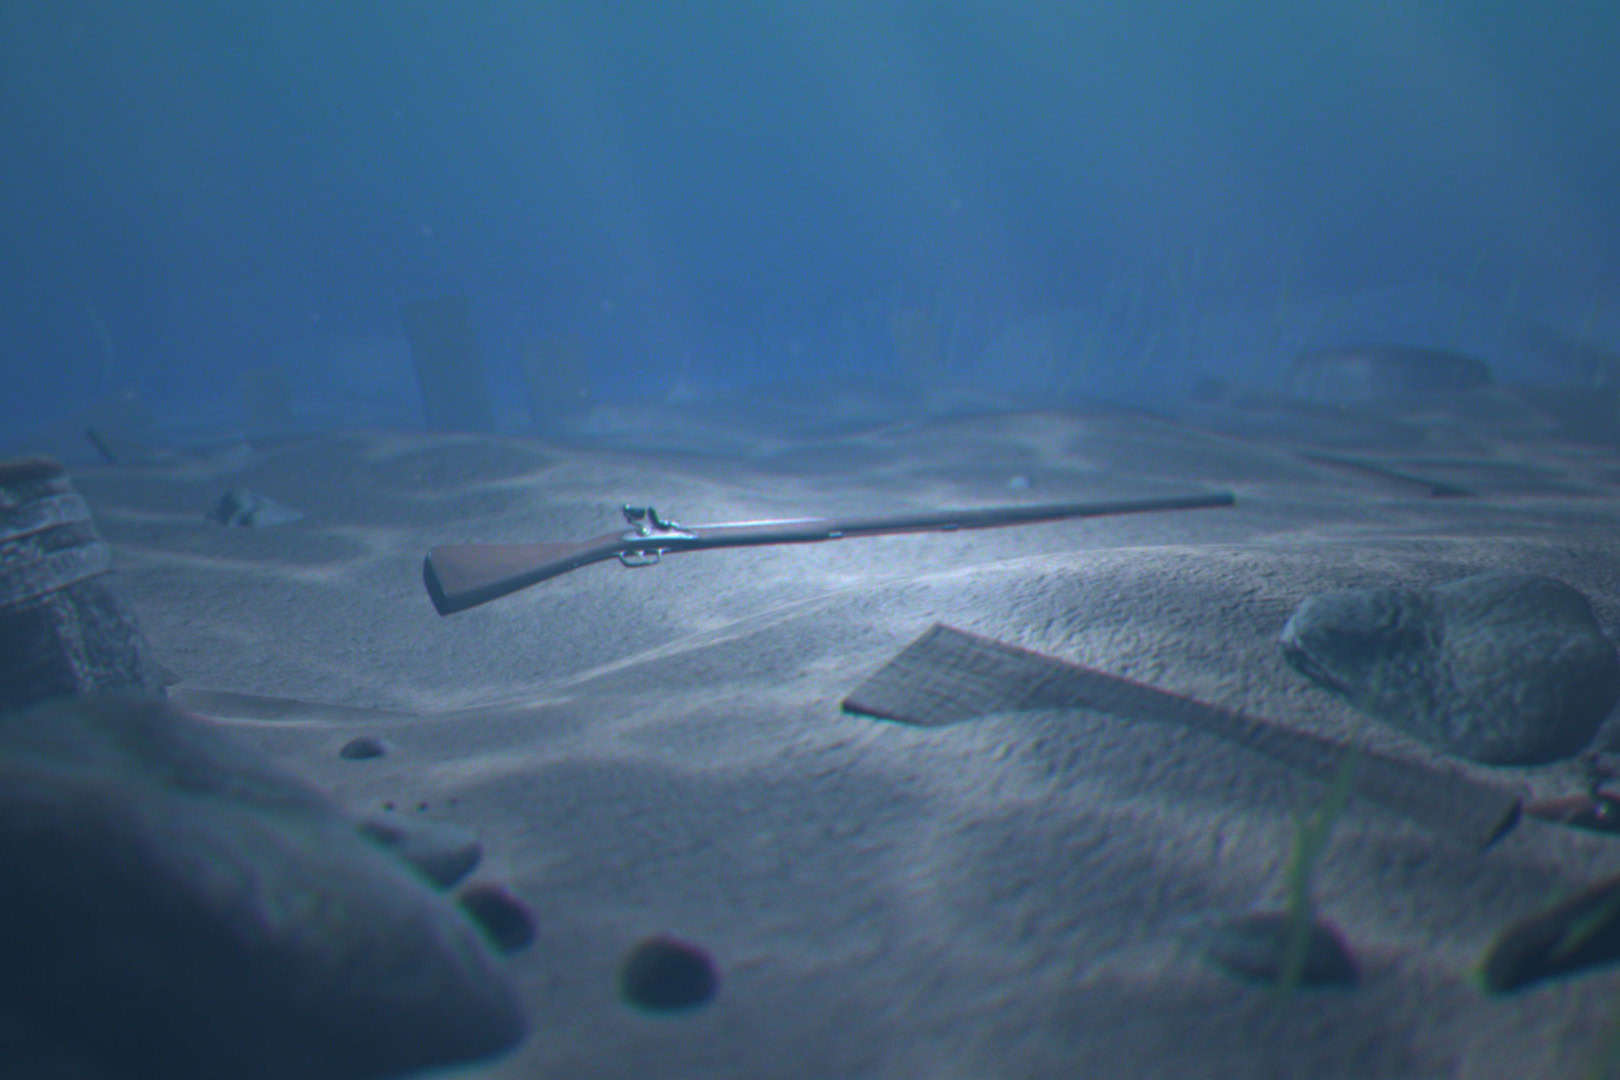 animation of rifle on ocean floor